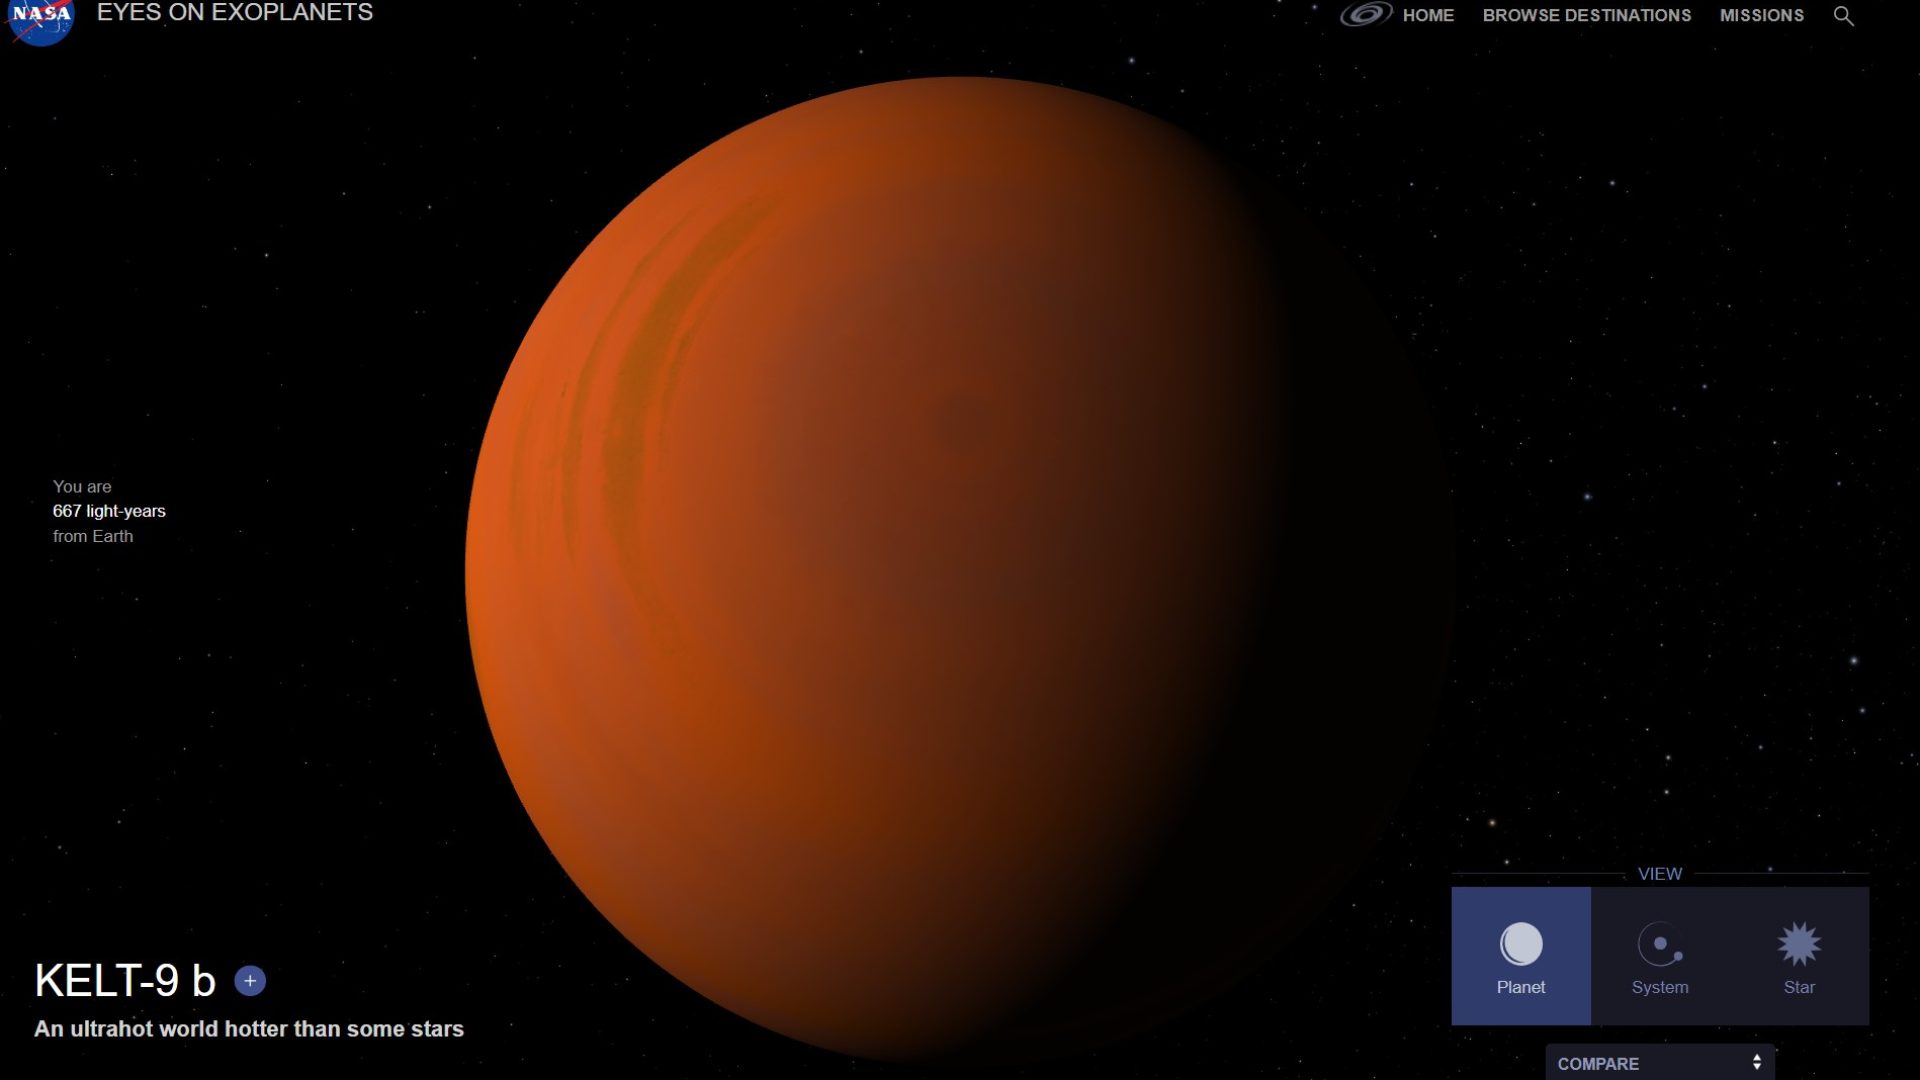 Exoplanet_KELT-9b. Credit: NASA